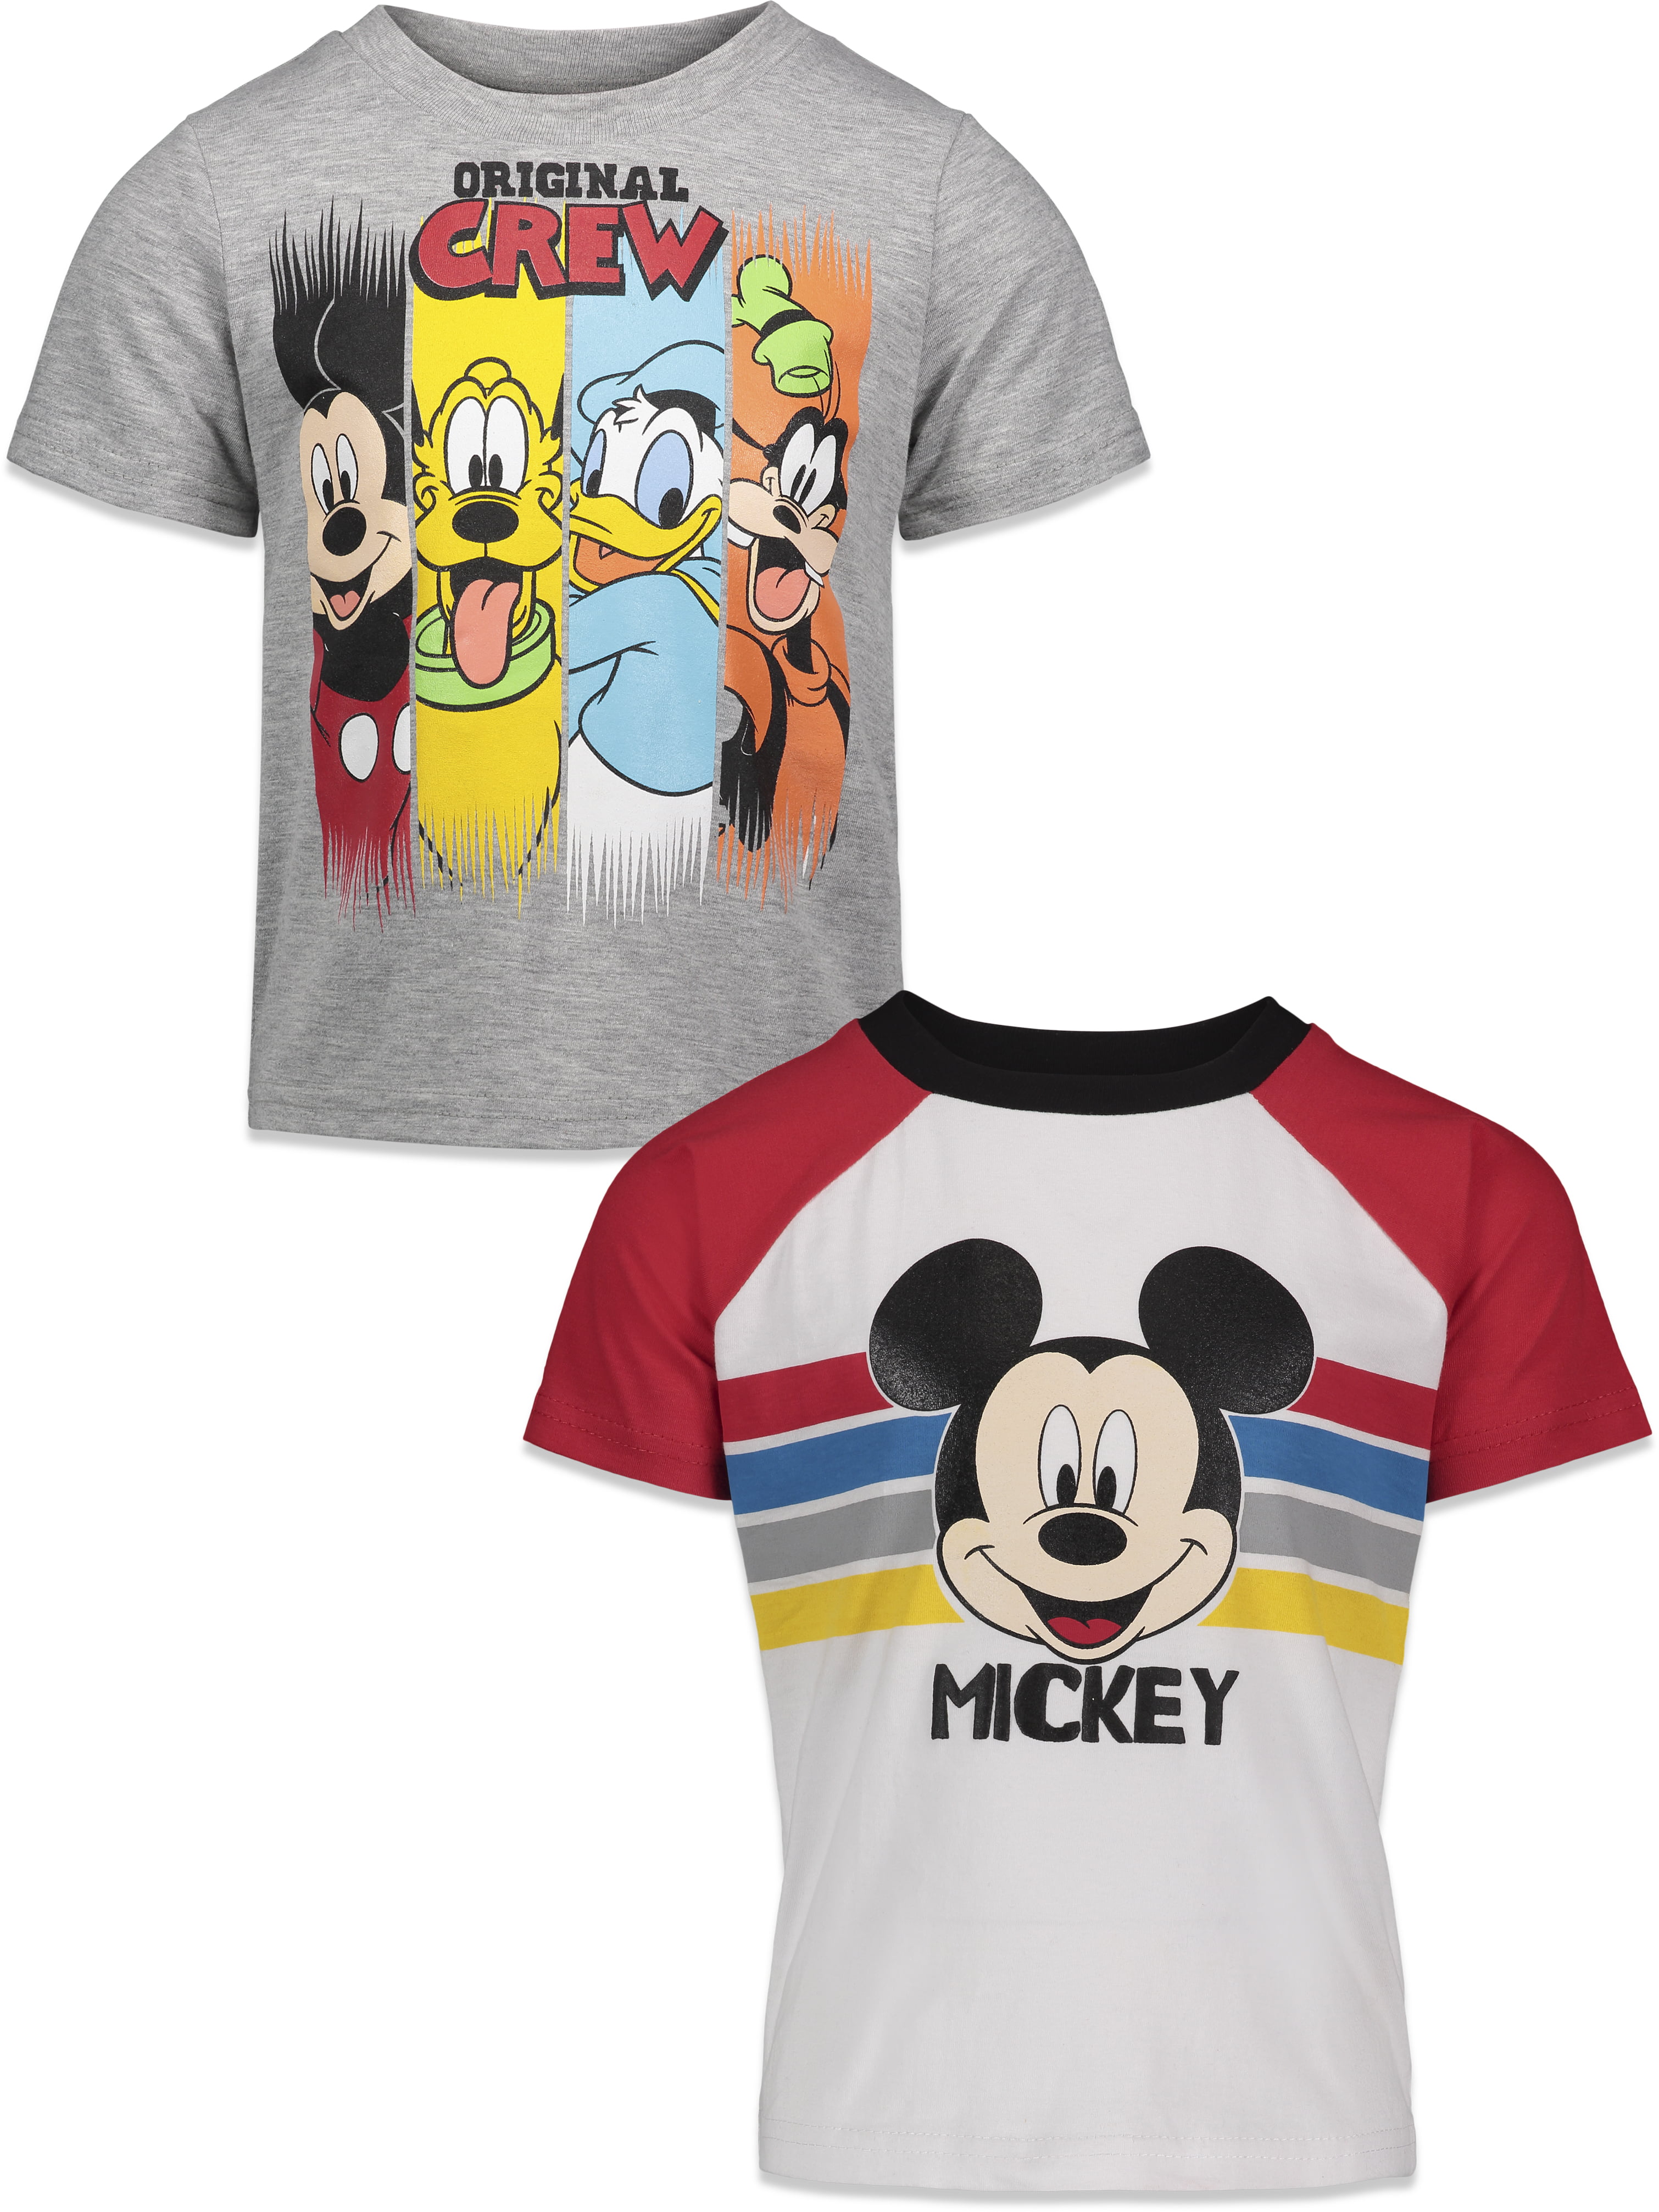 Disney Store Mickey Mouse Donald Pluto & Goofy T Shirt Boys Size 5/6 New 